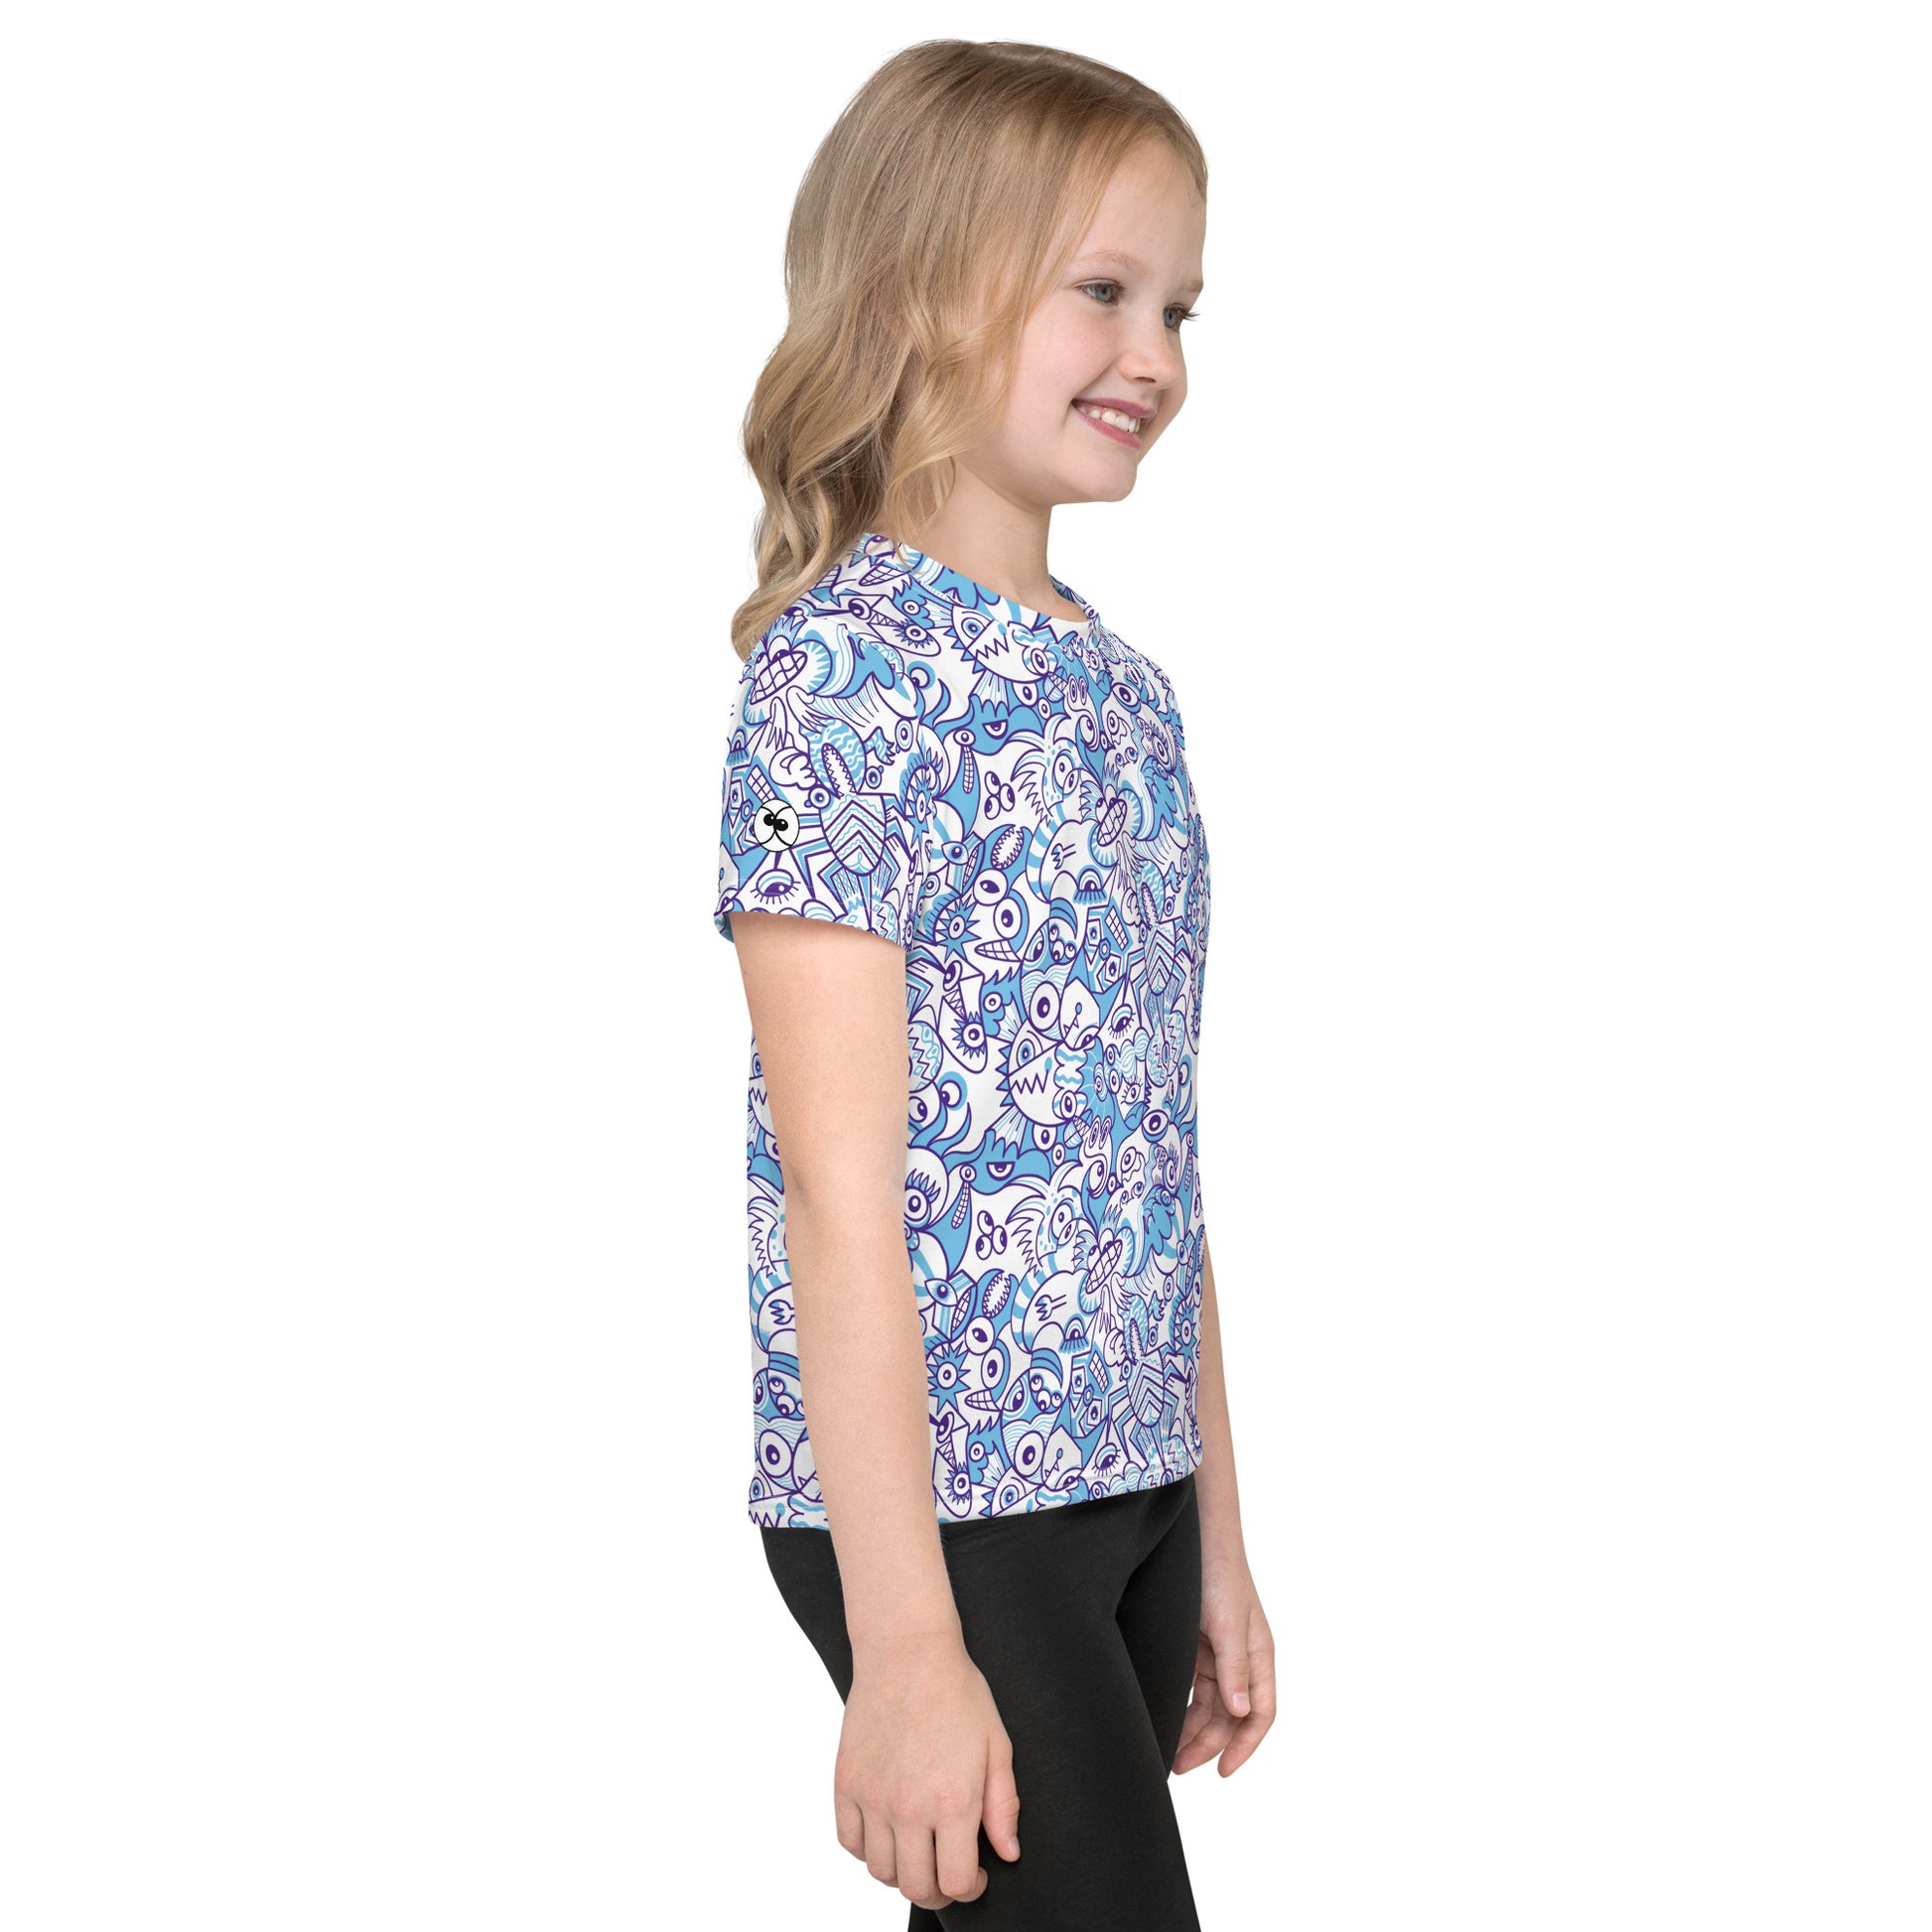 Whimsical Blue Doodle Critterscape pattern design - Kids crew neck t-shirt. Side view